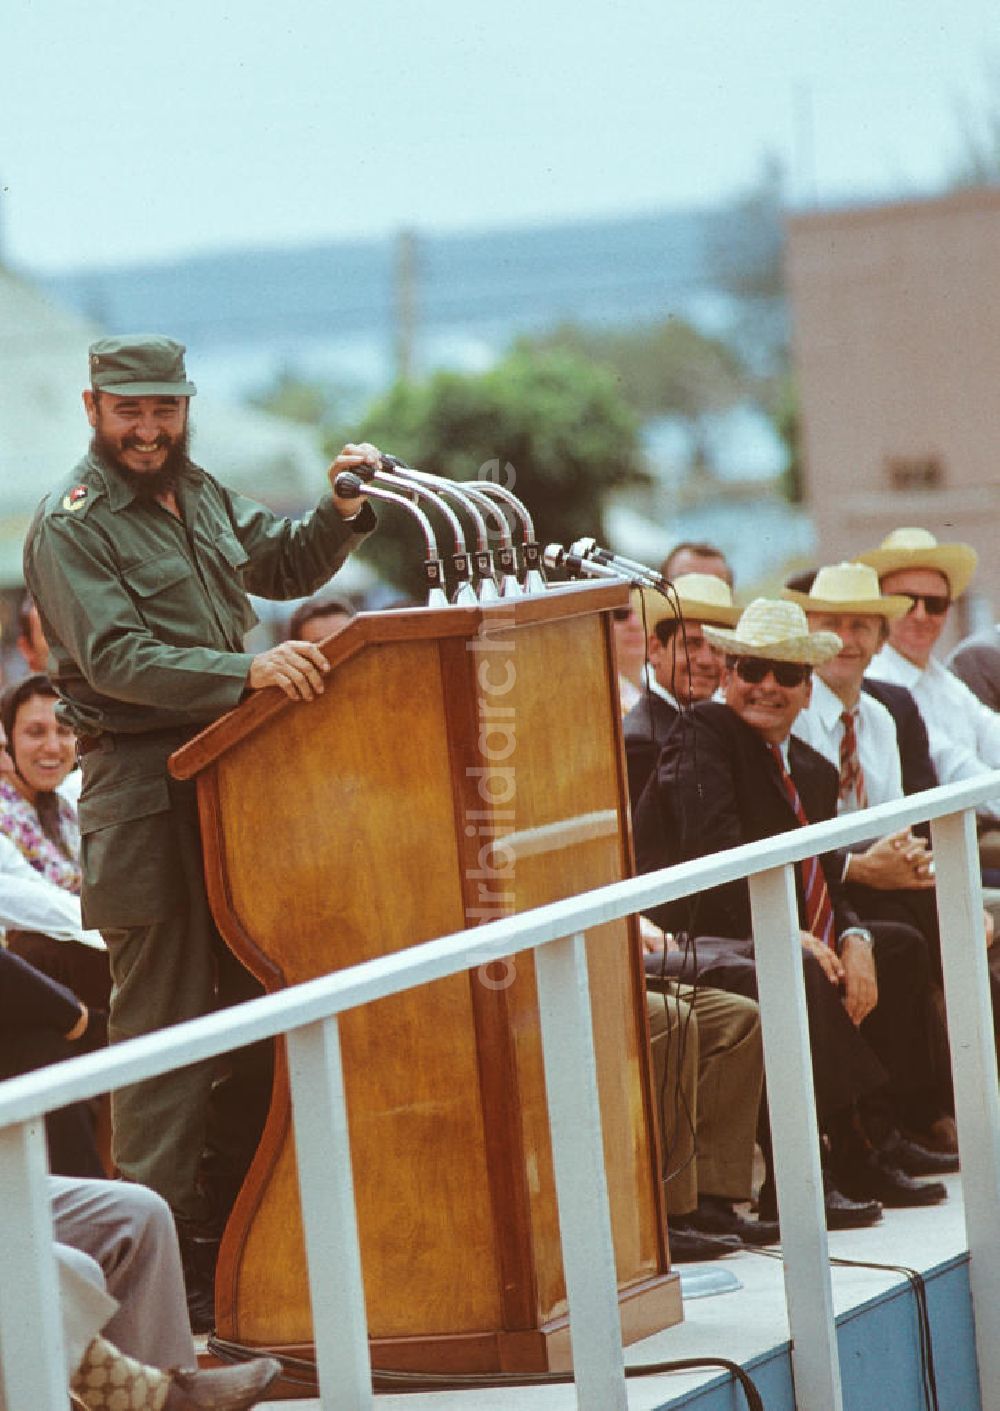 Cienfuegos: Staatsbesuch Erich Honecker 1974 in Kuba / Cuba - Cienfuegos